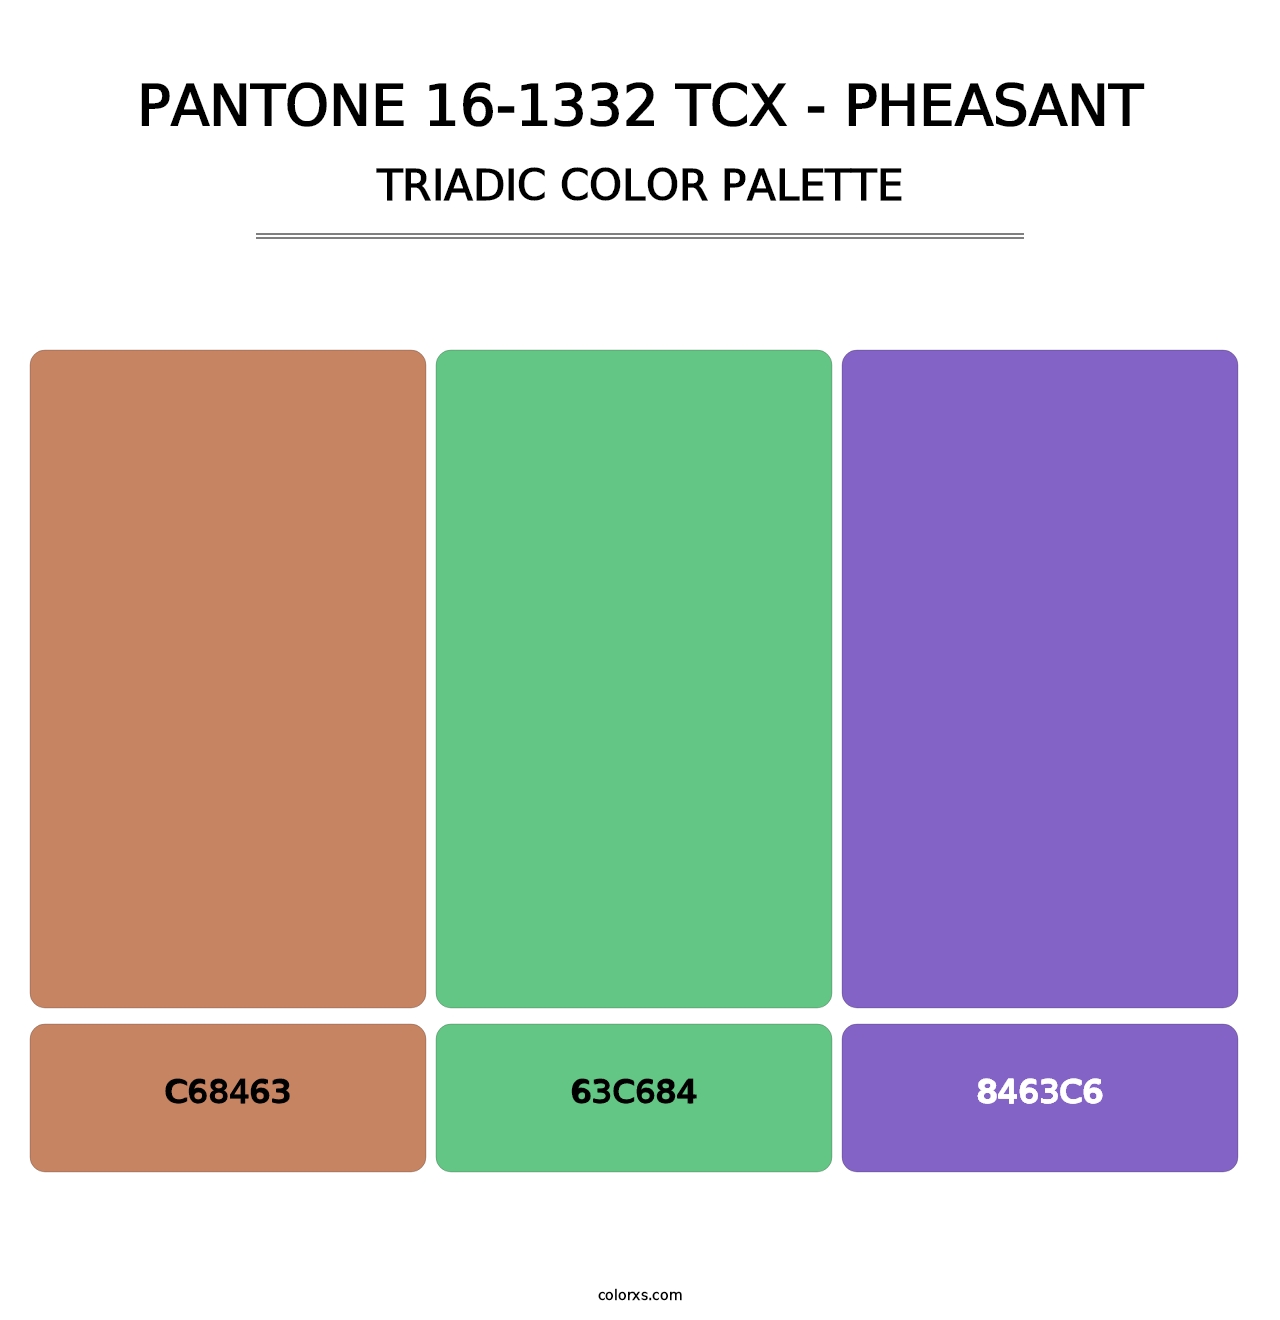 PANTONE 16-1332 TCX - Pheasant - Triadic Color Palette